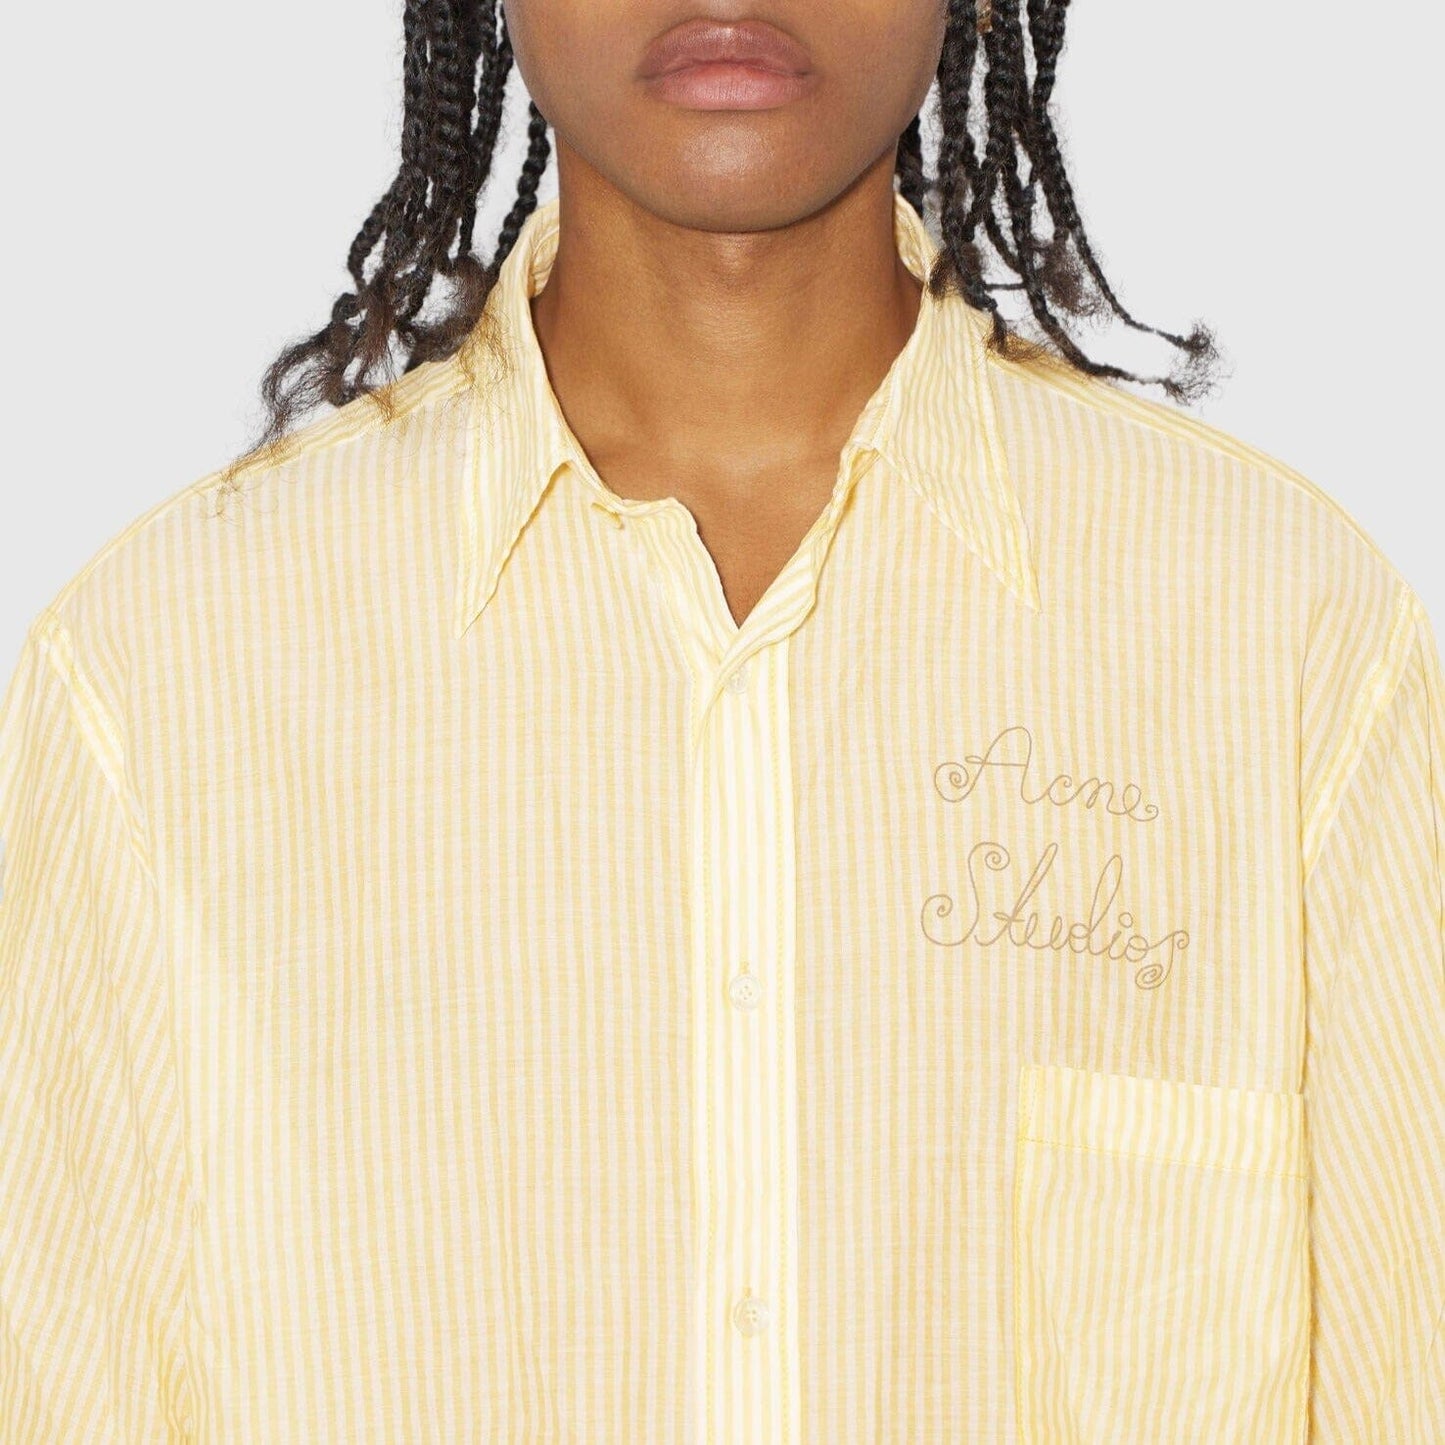 Acne Studios Short Sleeve Shirt - Yellow / White Shirt Acne Studios 